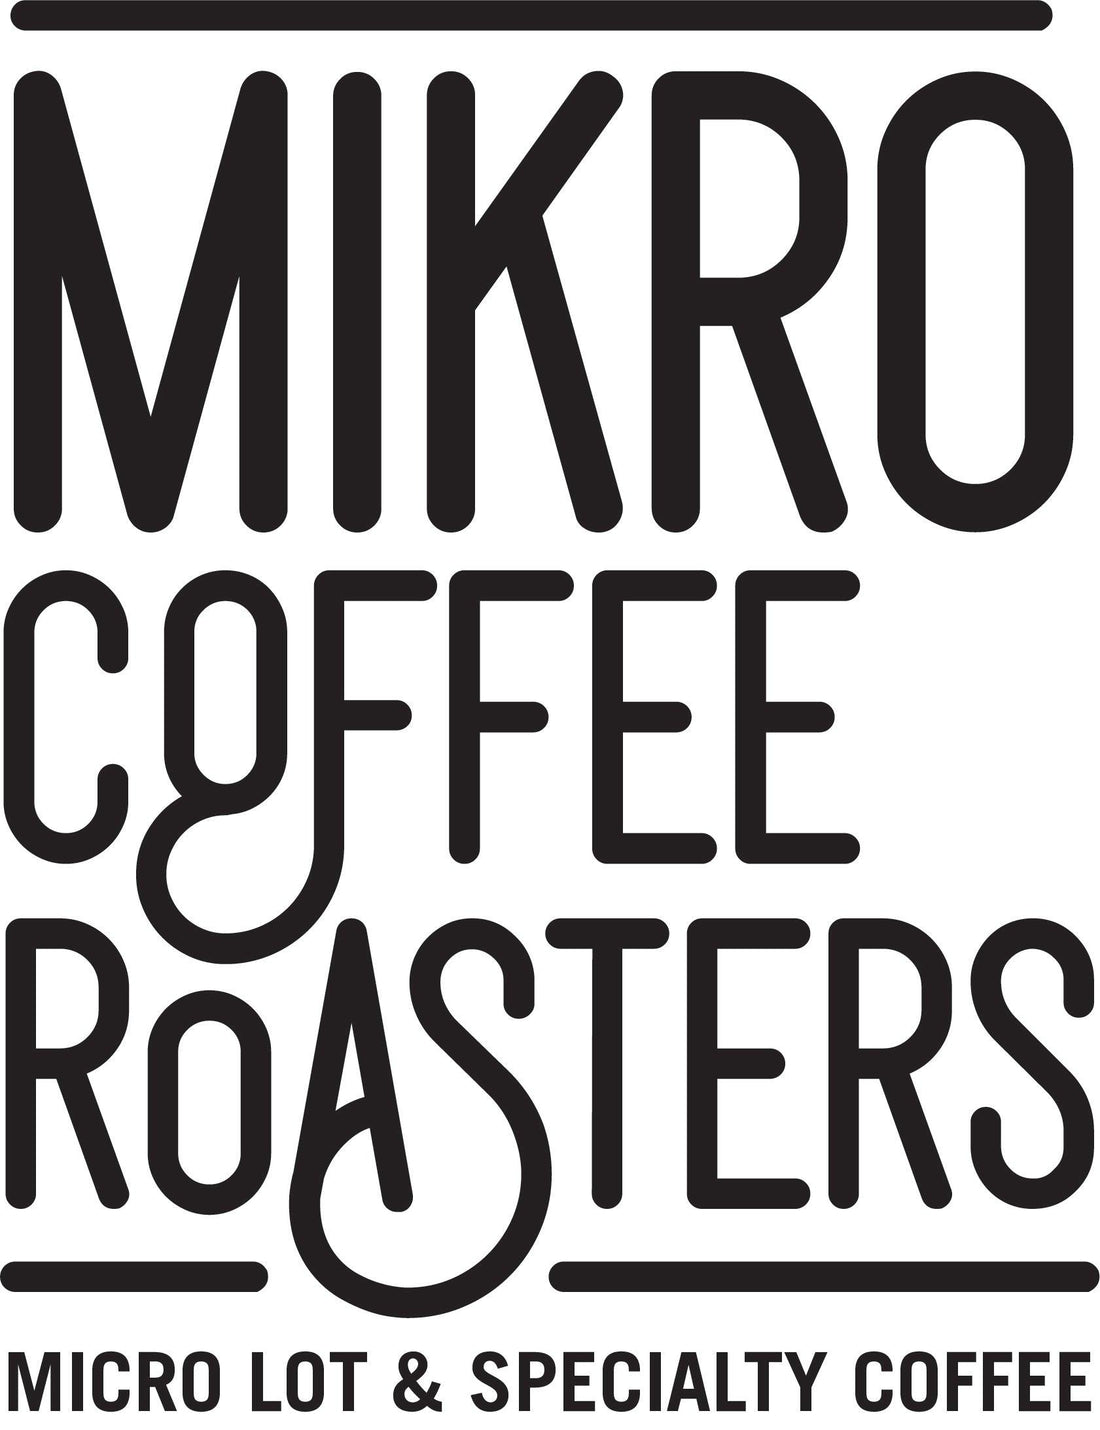 Welcome To Mikro Coffee Roasters Blog - Mikro Coffee Roasters Torquay